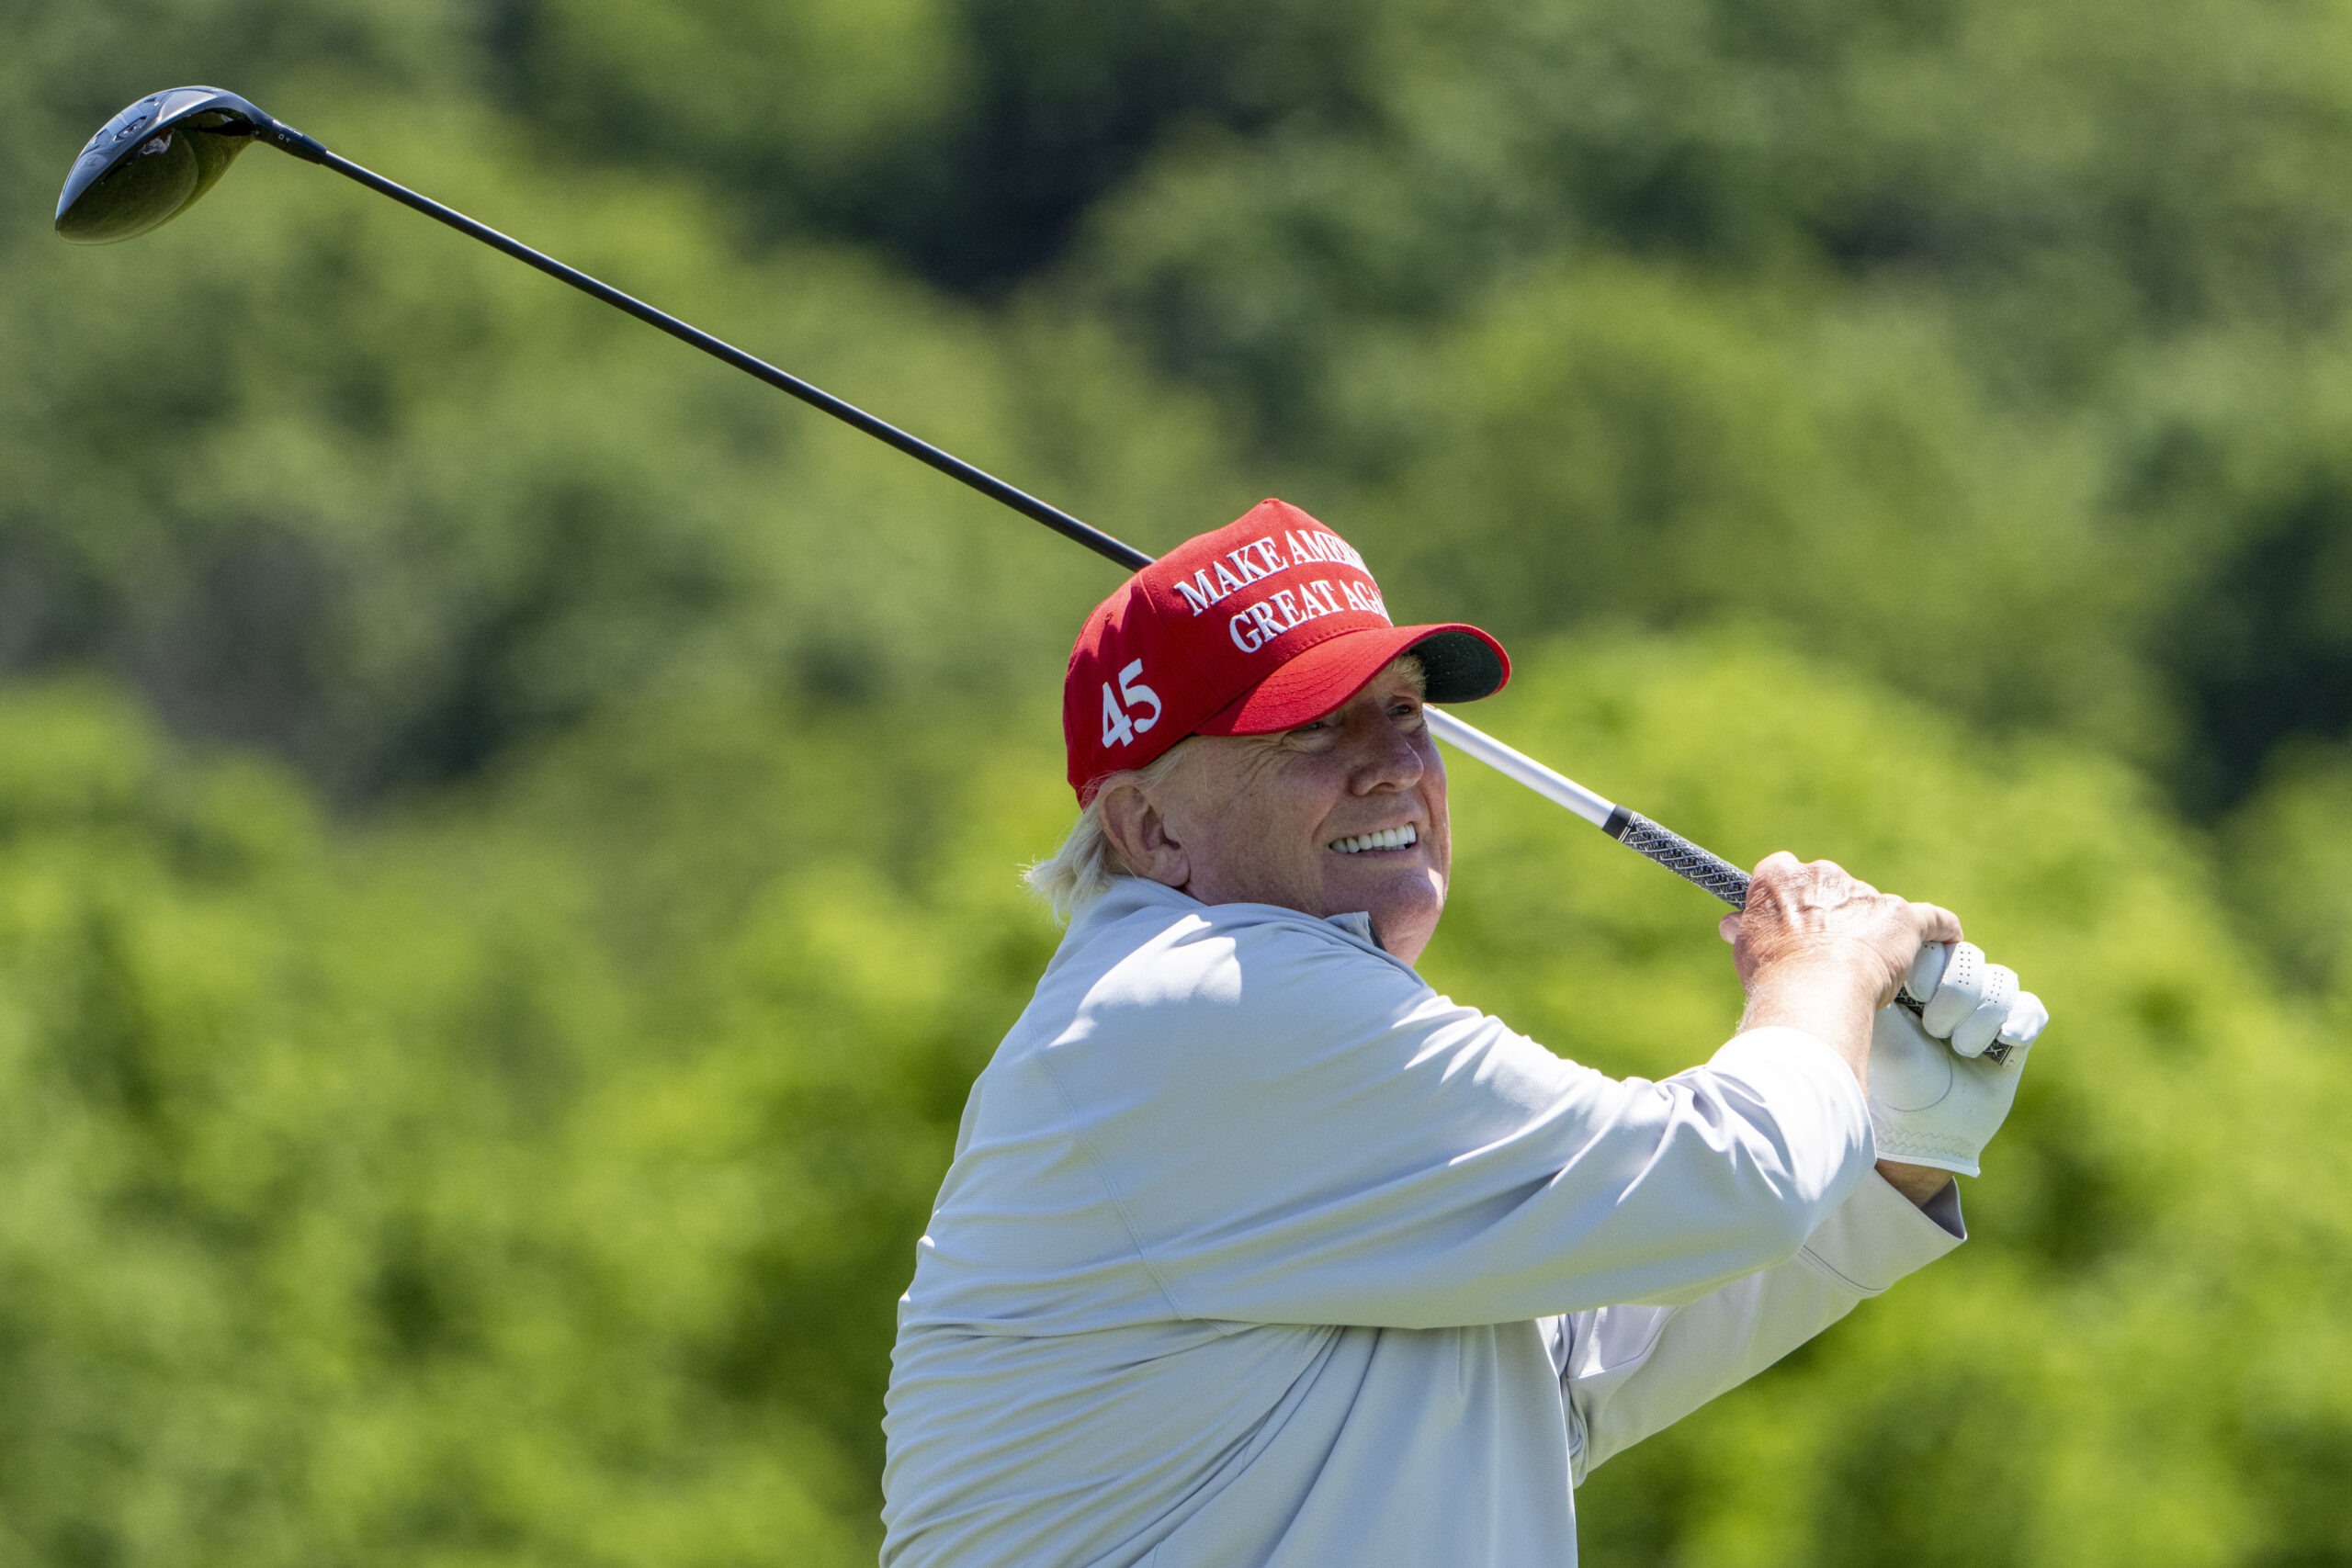 Trump National Golf Club at risk after New York registers fraud judgment – Washington Examiner